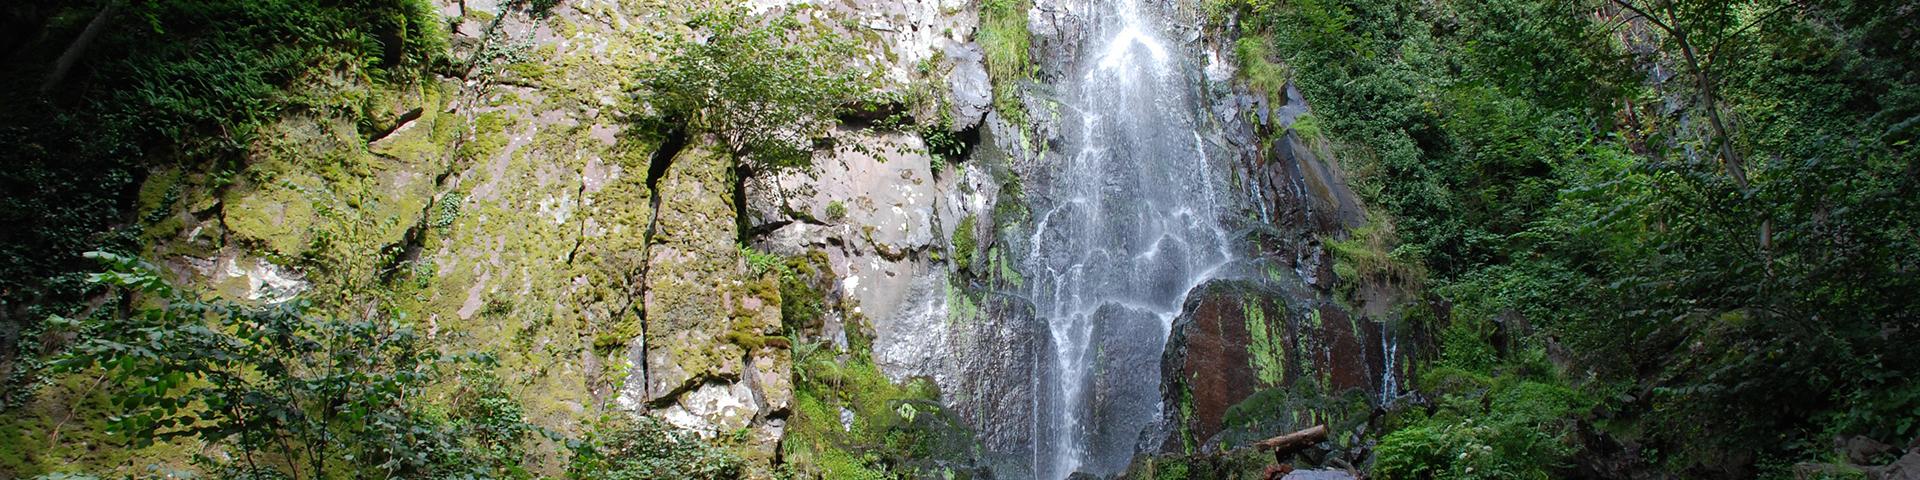 The Nideck waterfall, Bas-Rhin